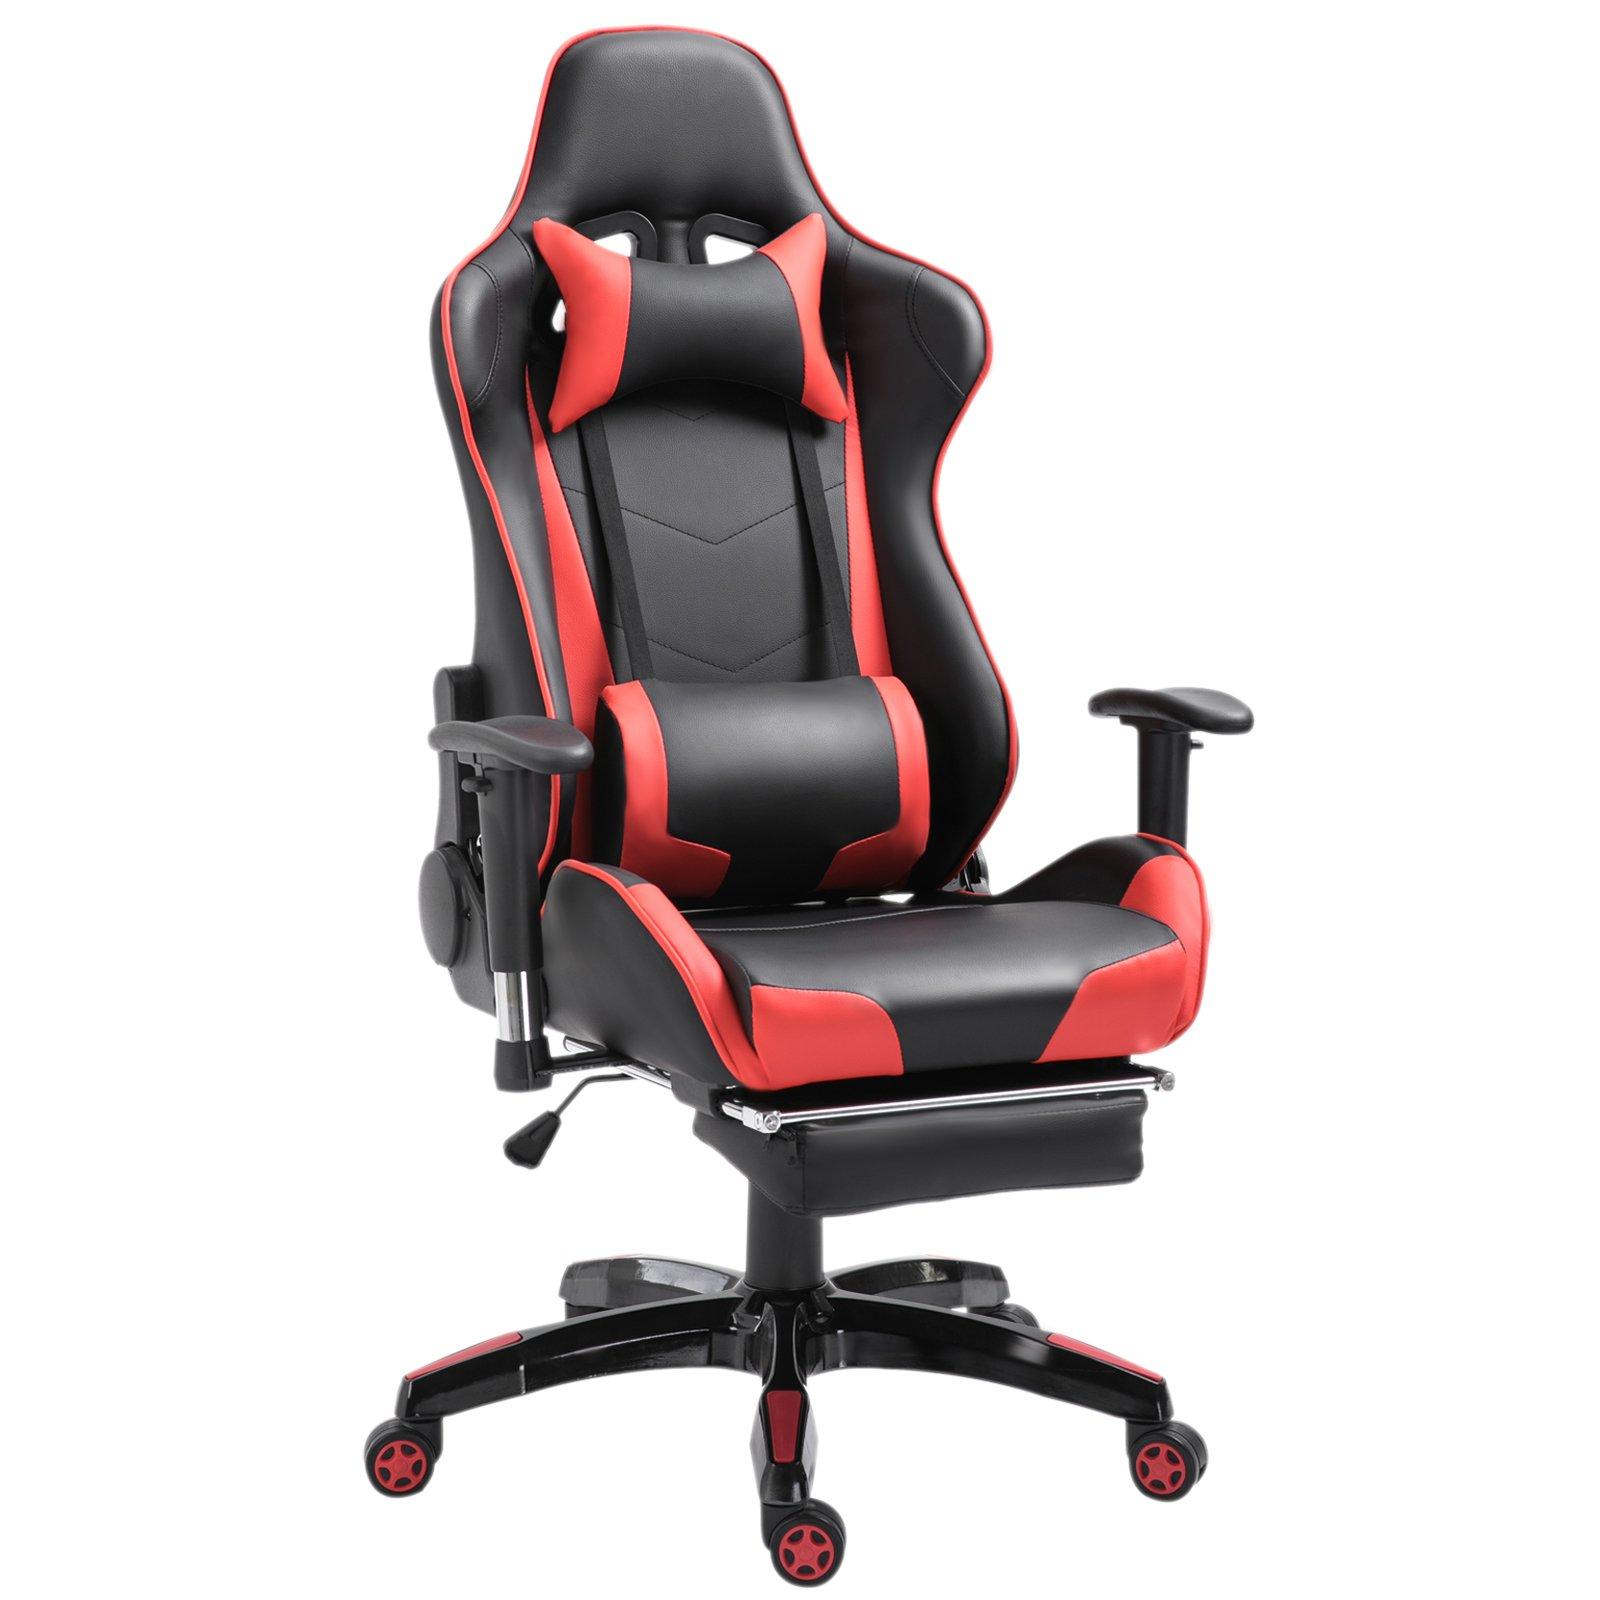 Ergonomic Gaming Chair Reclining Racing Chair with Swivel Wheels